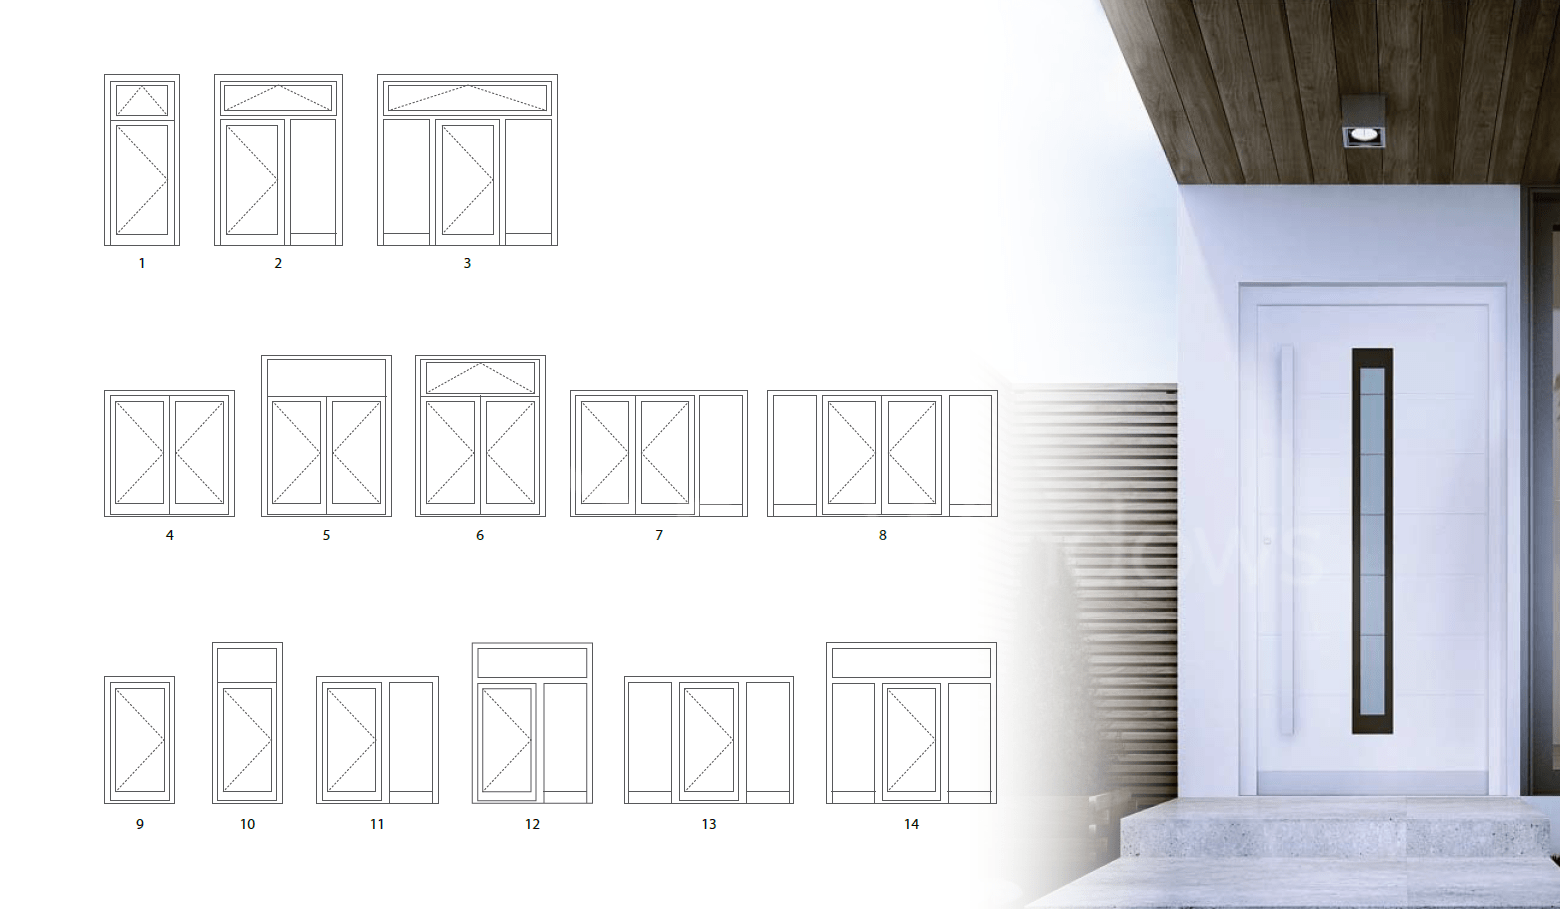 consstructions of a series doors